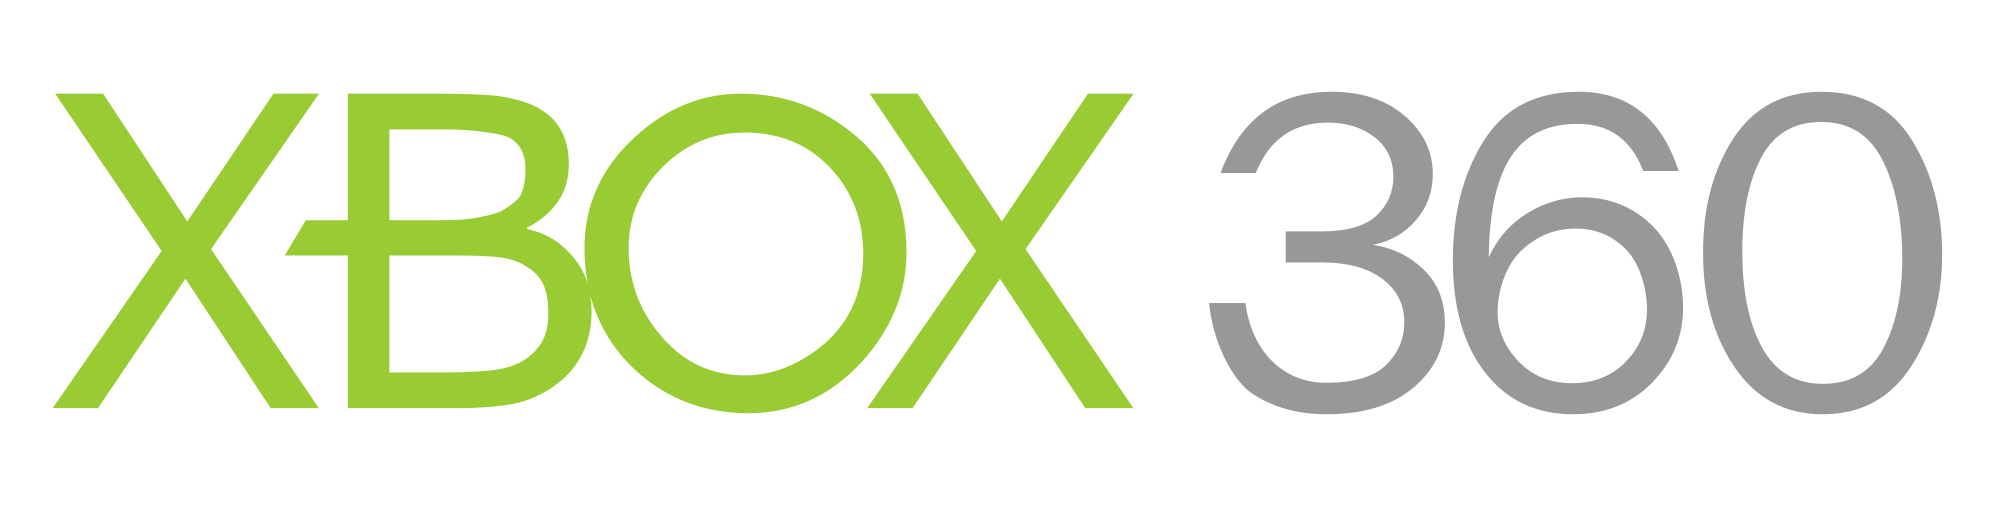 Xbox 360 Logo - File:Xbox 360 logo.svg - Wikimedia Commons